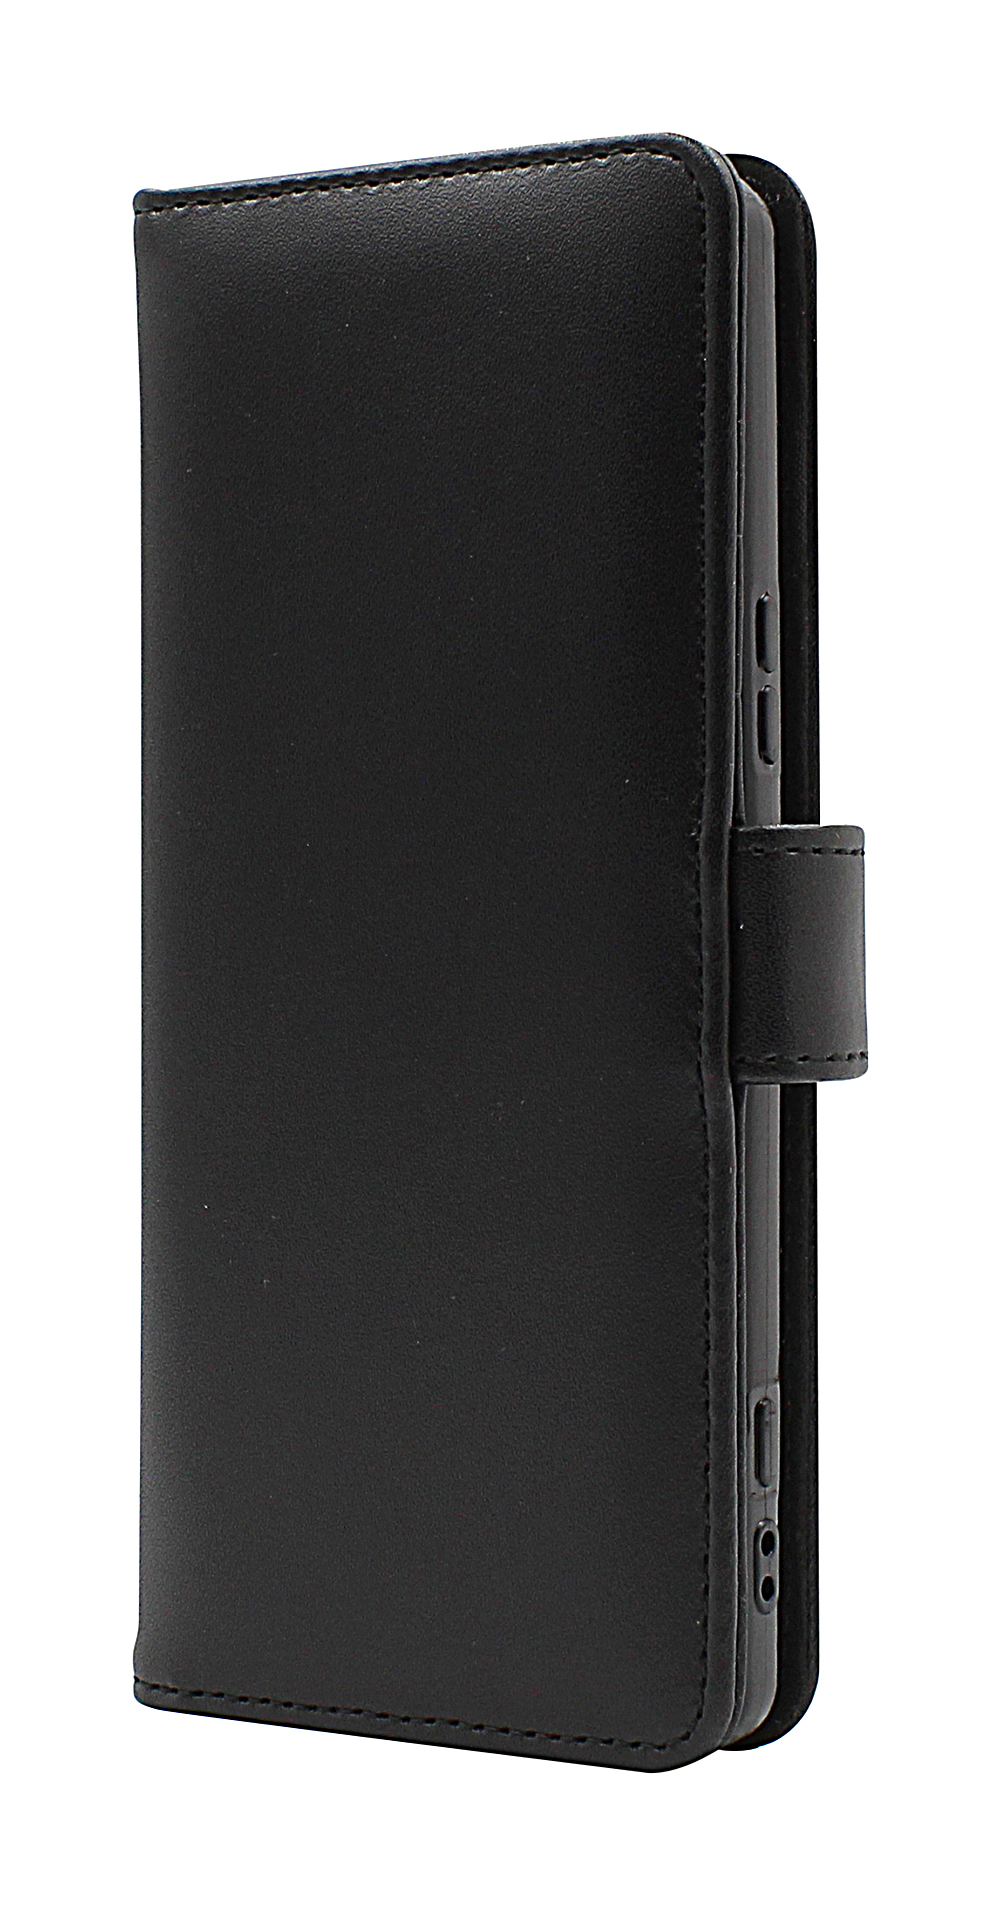 Skimblocker Lommebok-etui Sony Xperia 5 IV 5G